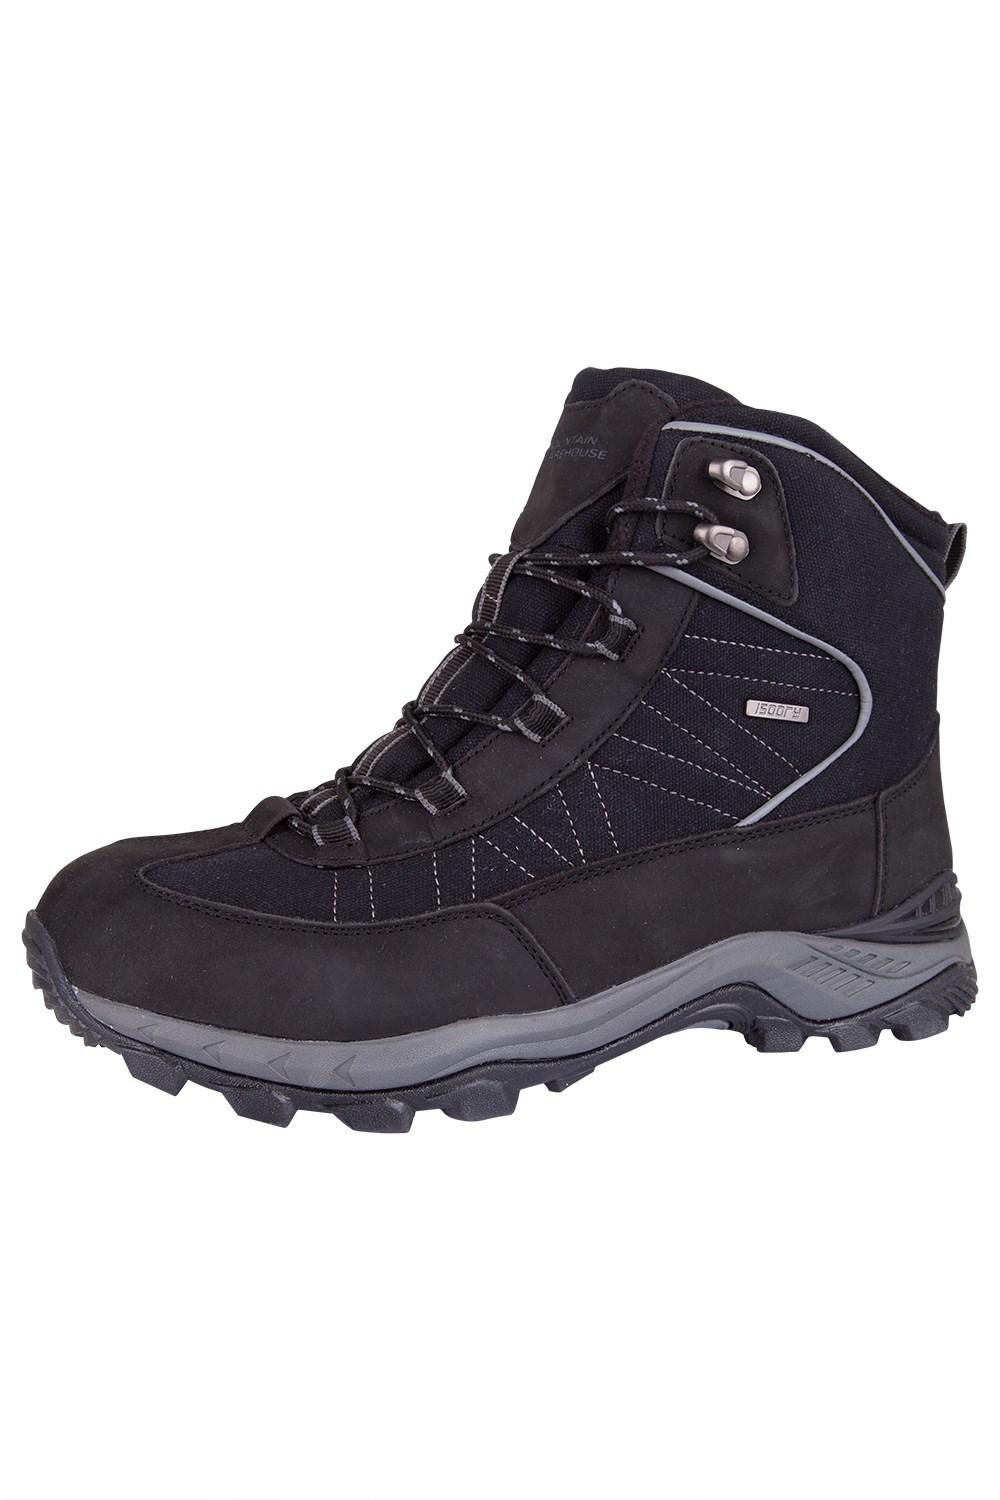 Mountain Warehouse Boulder Mens Winter Trekker Boots | eBay